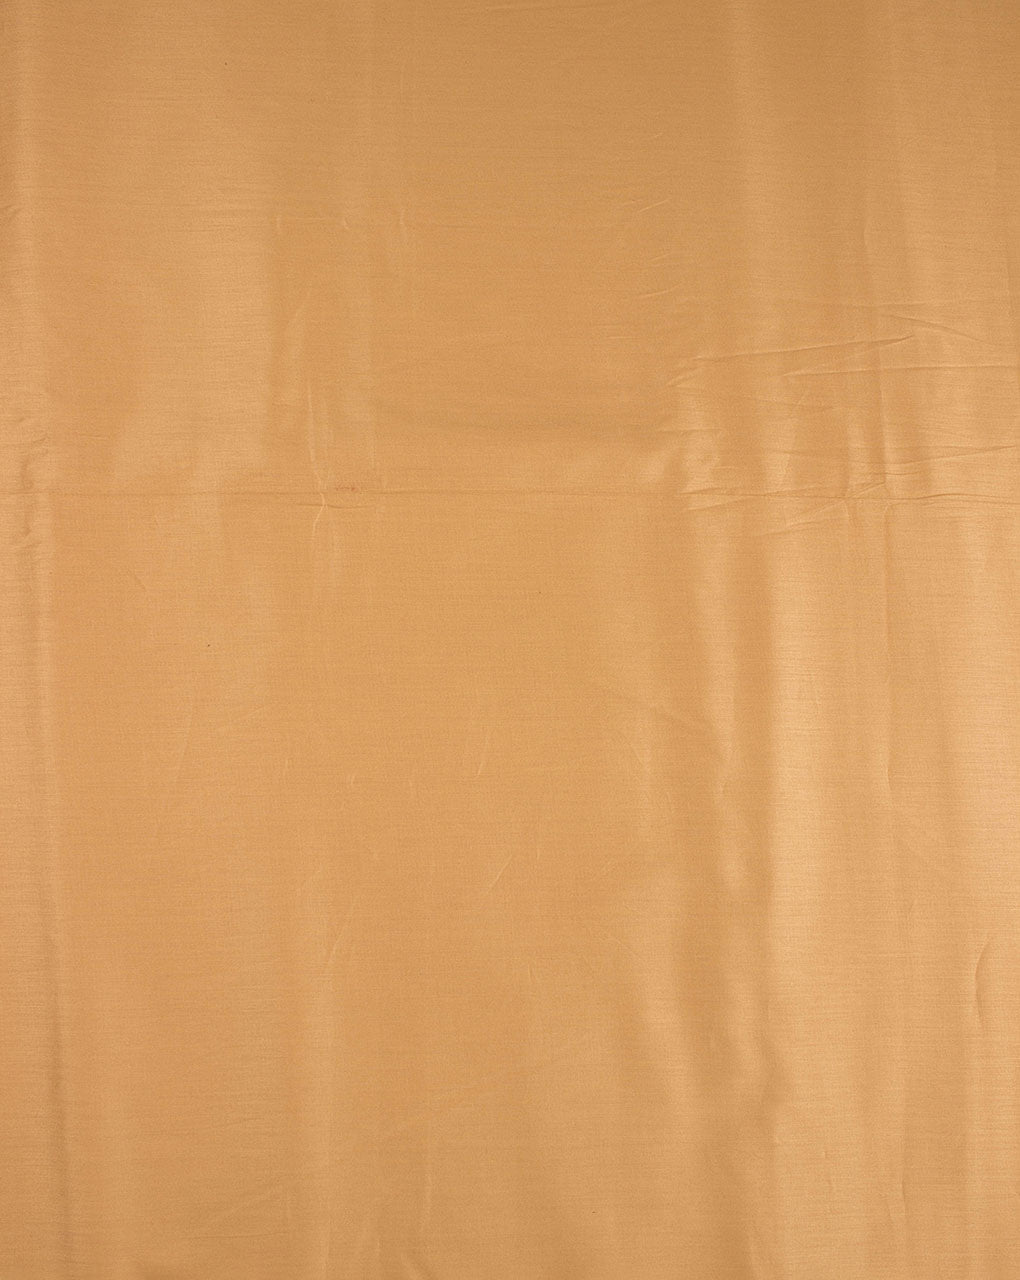 Dark Beige Plain Glazed Cotton Fabric - Fabriclore.com